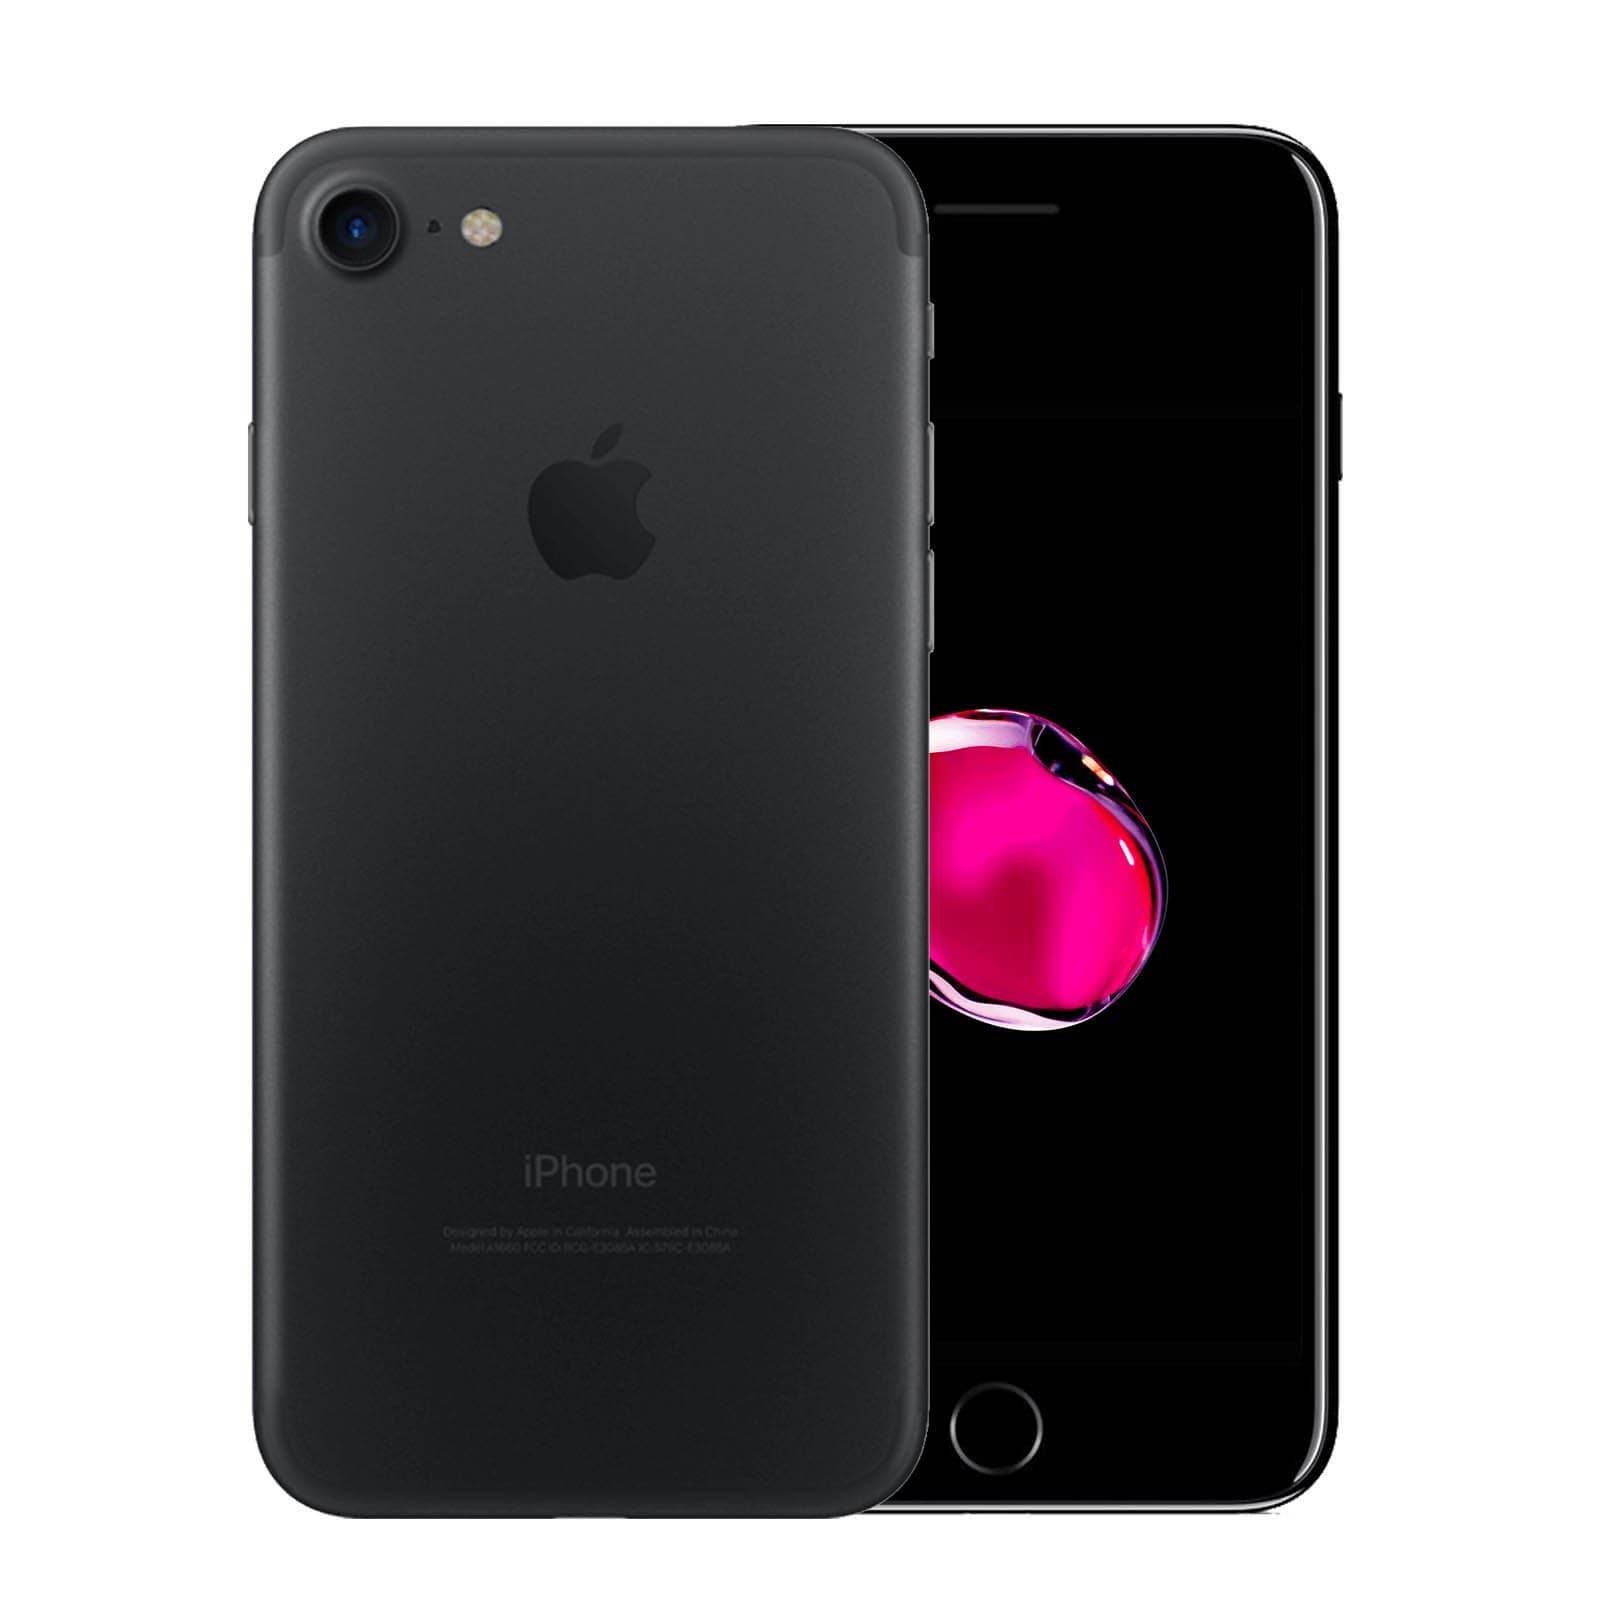 Apple iPhone 7 256GB Black Very Good - Unlocked 256GB Black Very Good